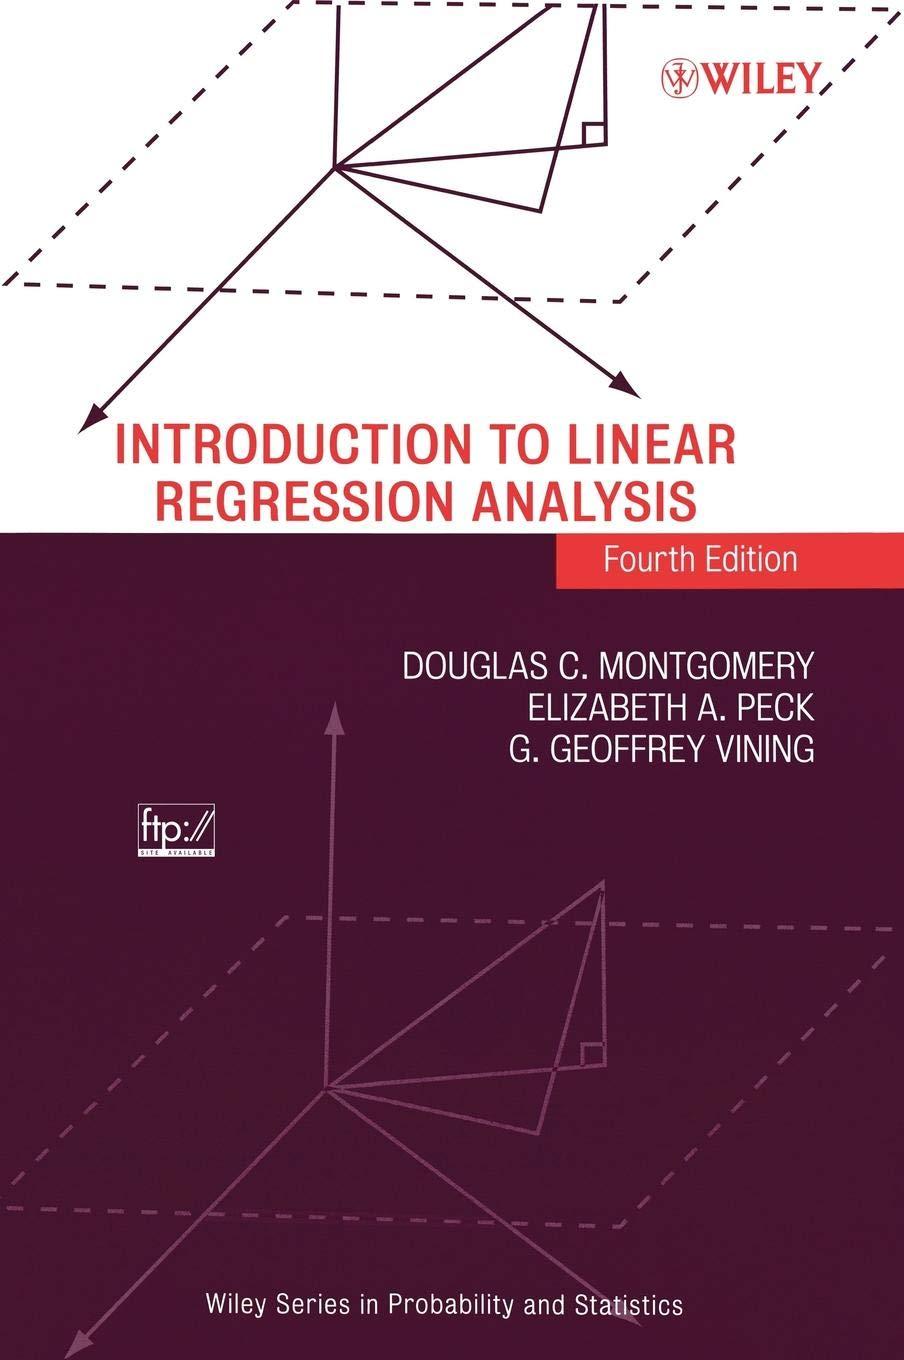 introduction to linear regression analysis 4th edition douglas c. montgomery, elizabeth a. peck, g. geoffrey